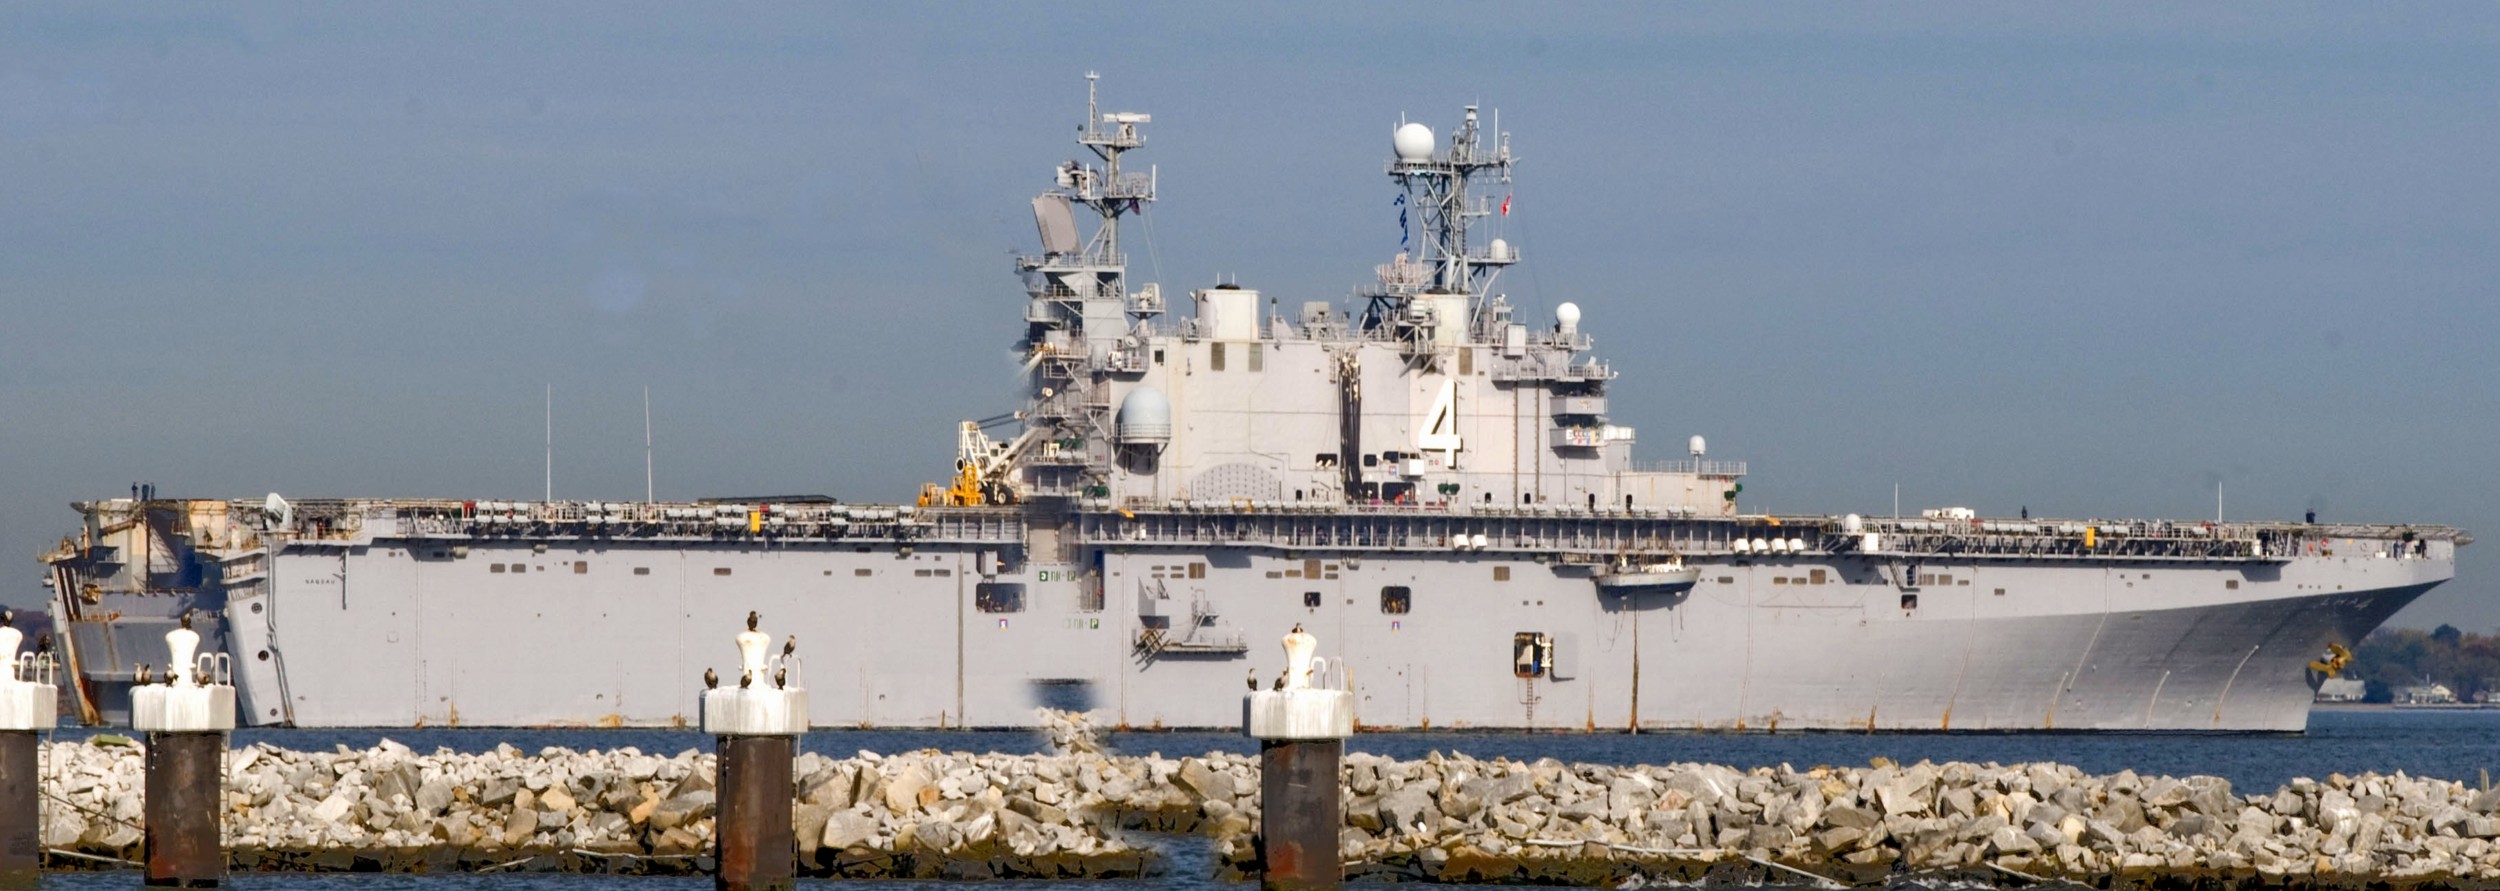 lha-4 uss nassau tarawa class amphibious assault ship us navy 62 norfolk virginia